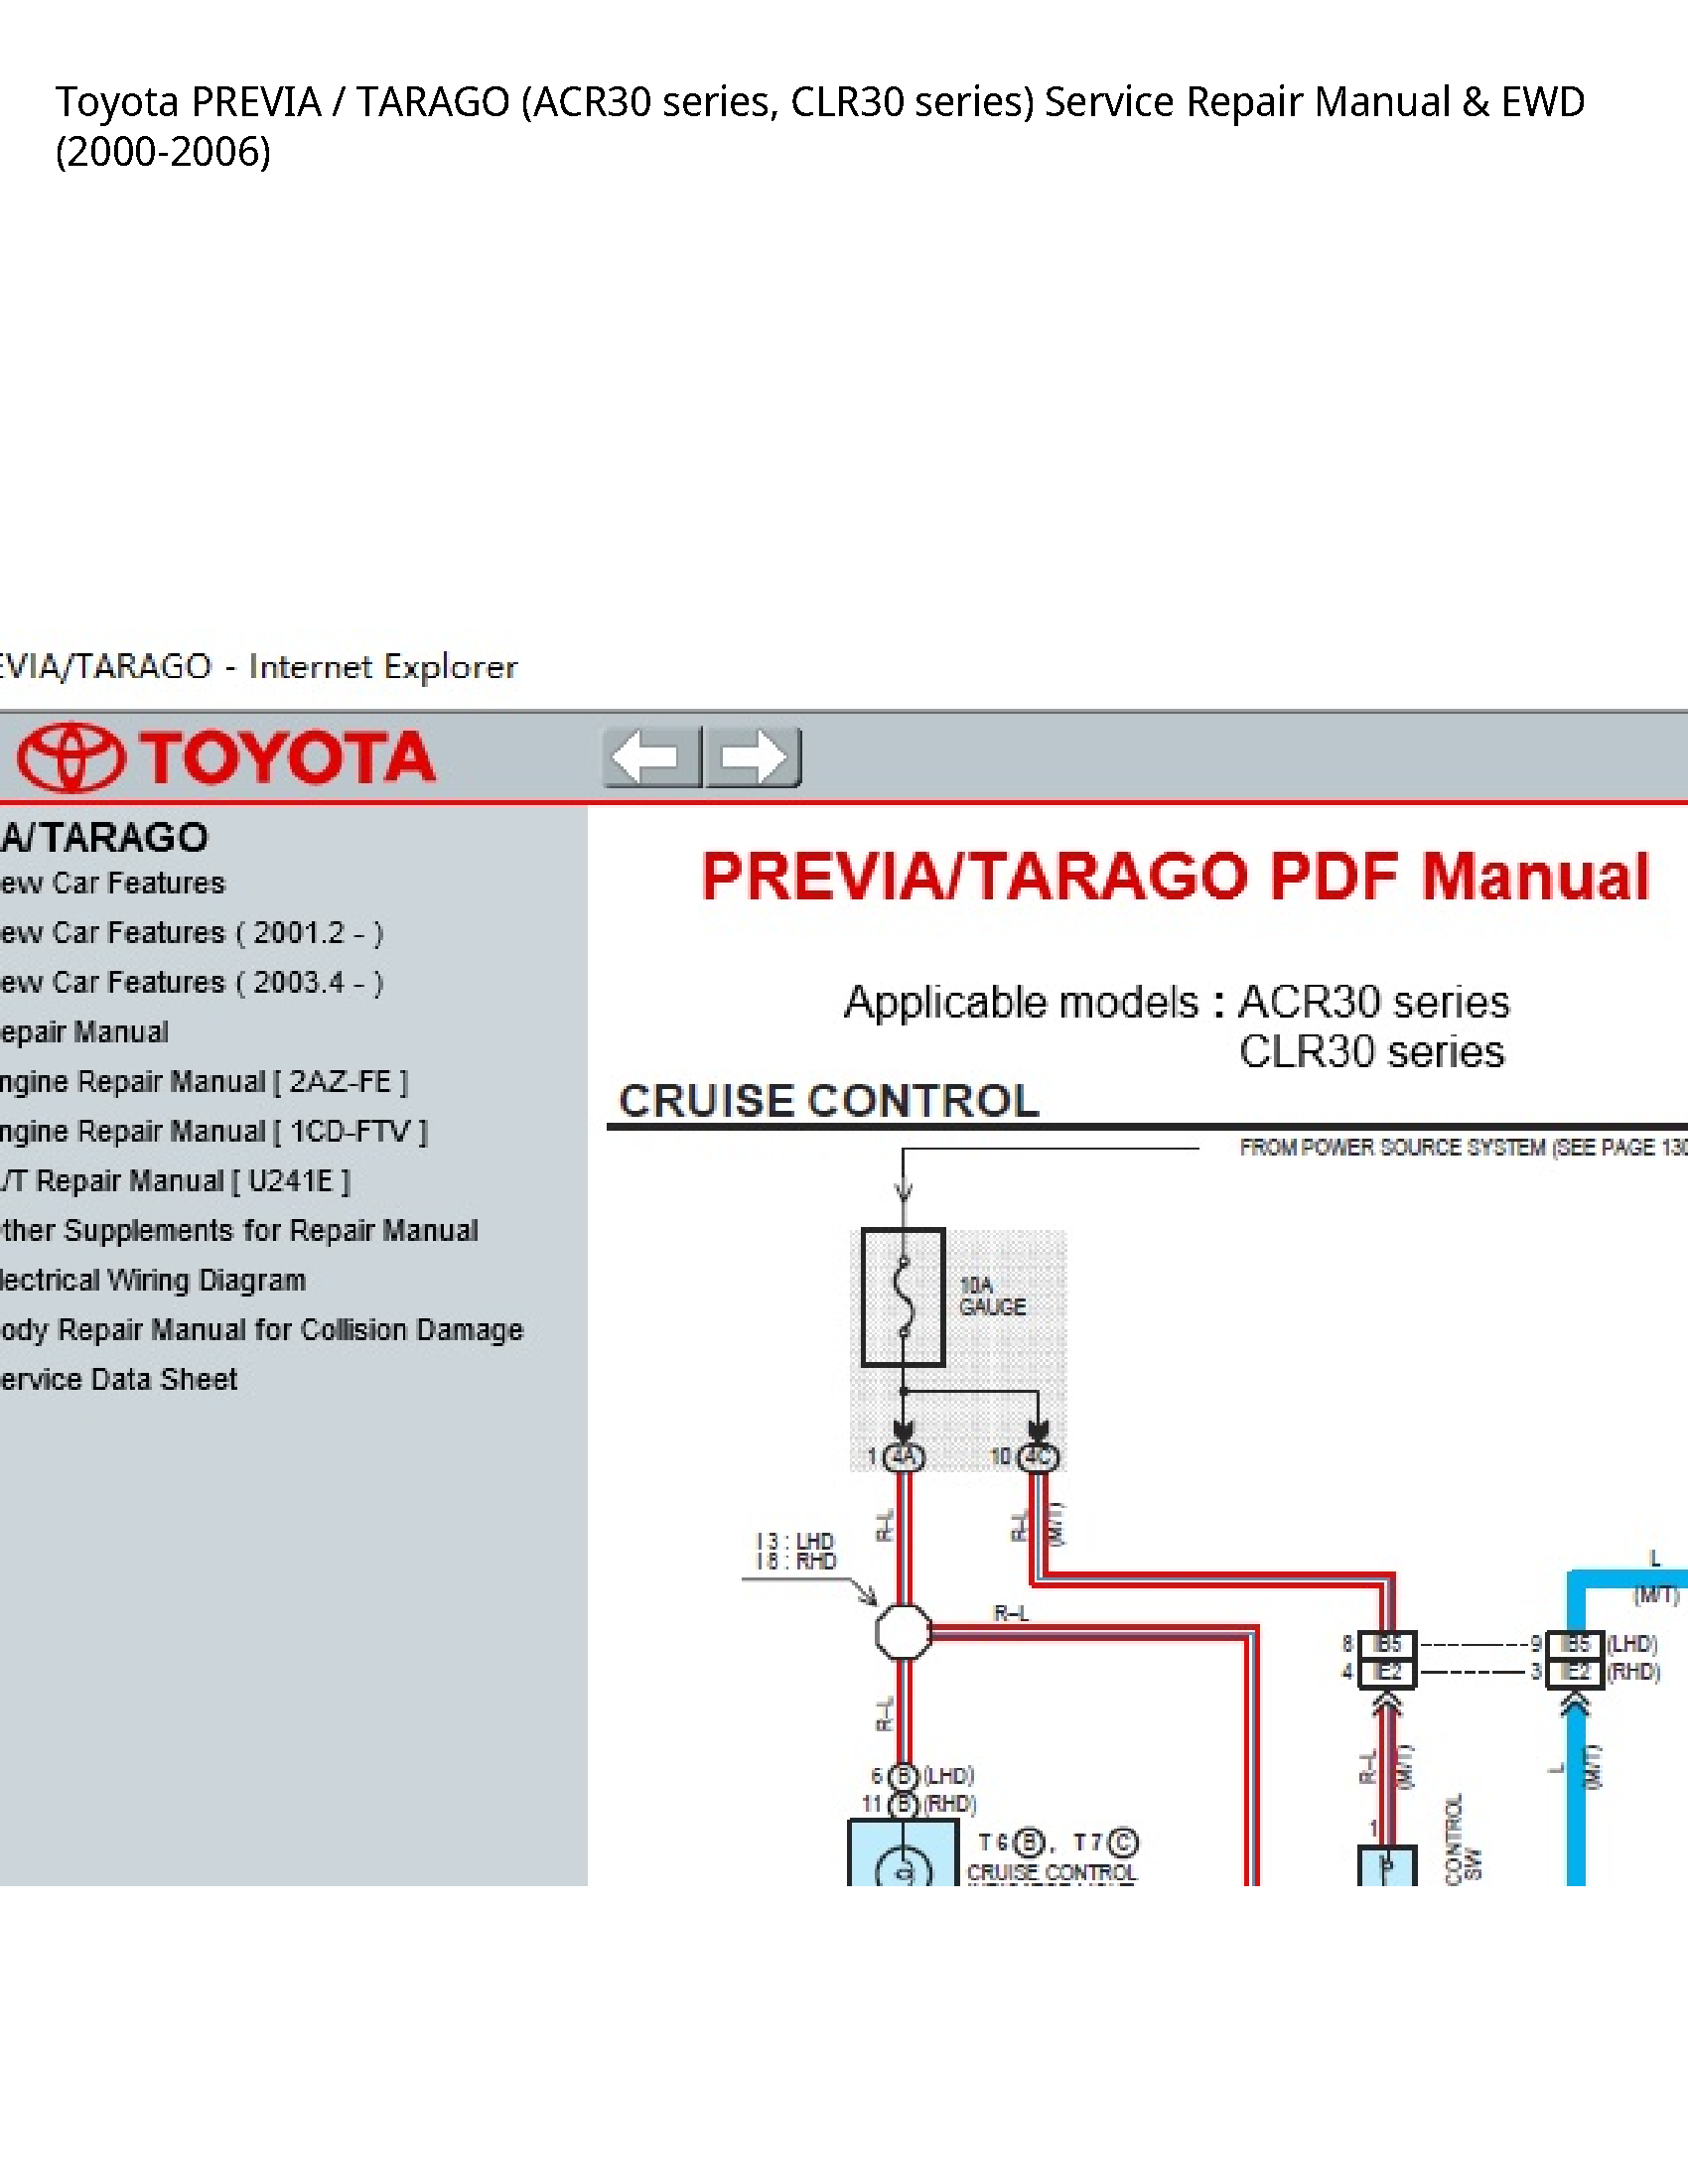 Toyota (ACR30 PREVIA TARAGO series manual